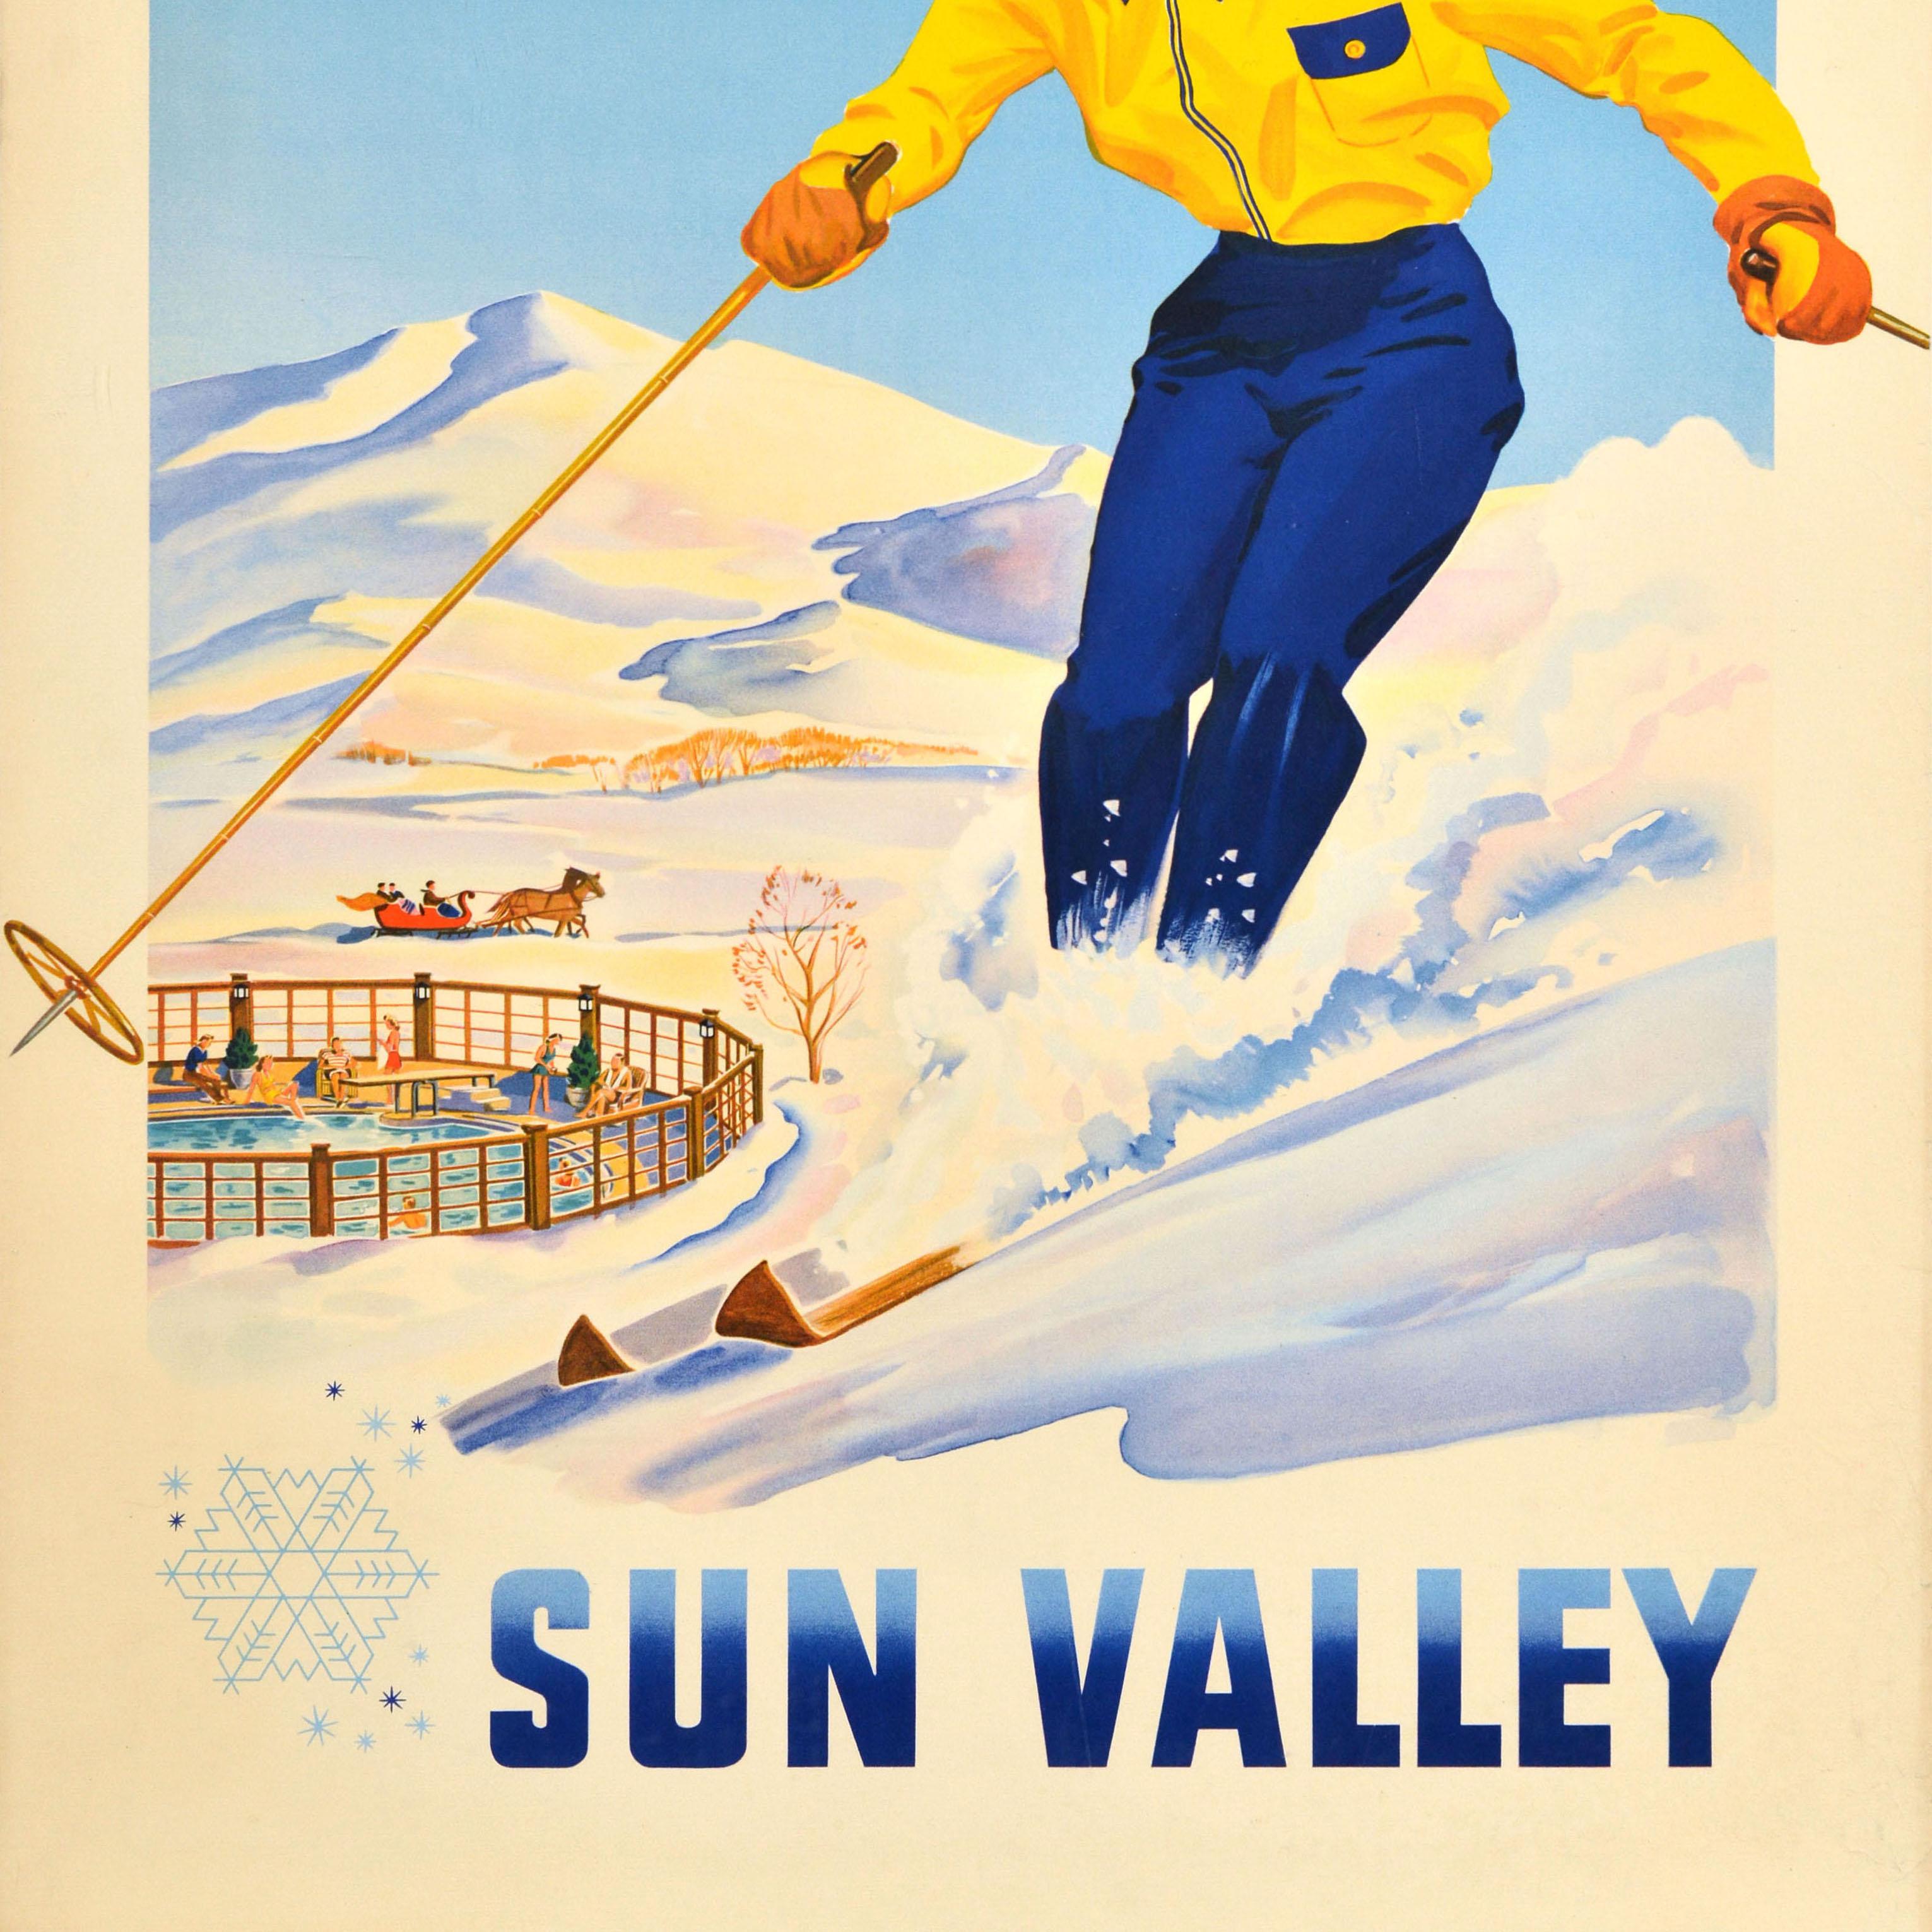 Original Vintage Winter Ski Sports Travel Poster This Winter Sun Valley Idaho For Sale 1